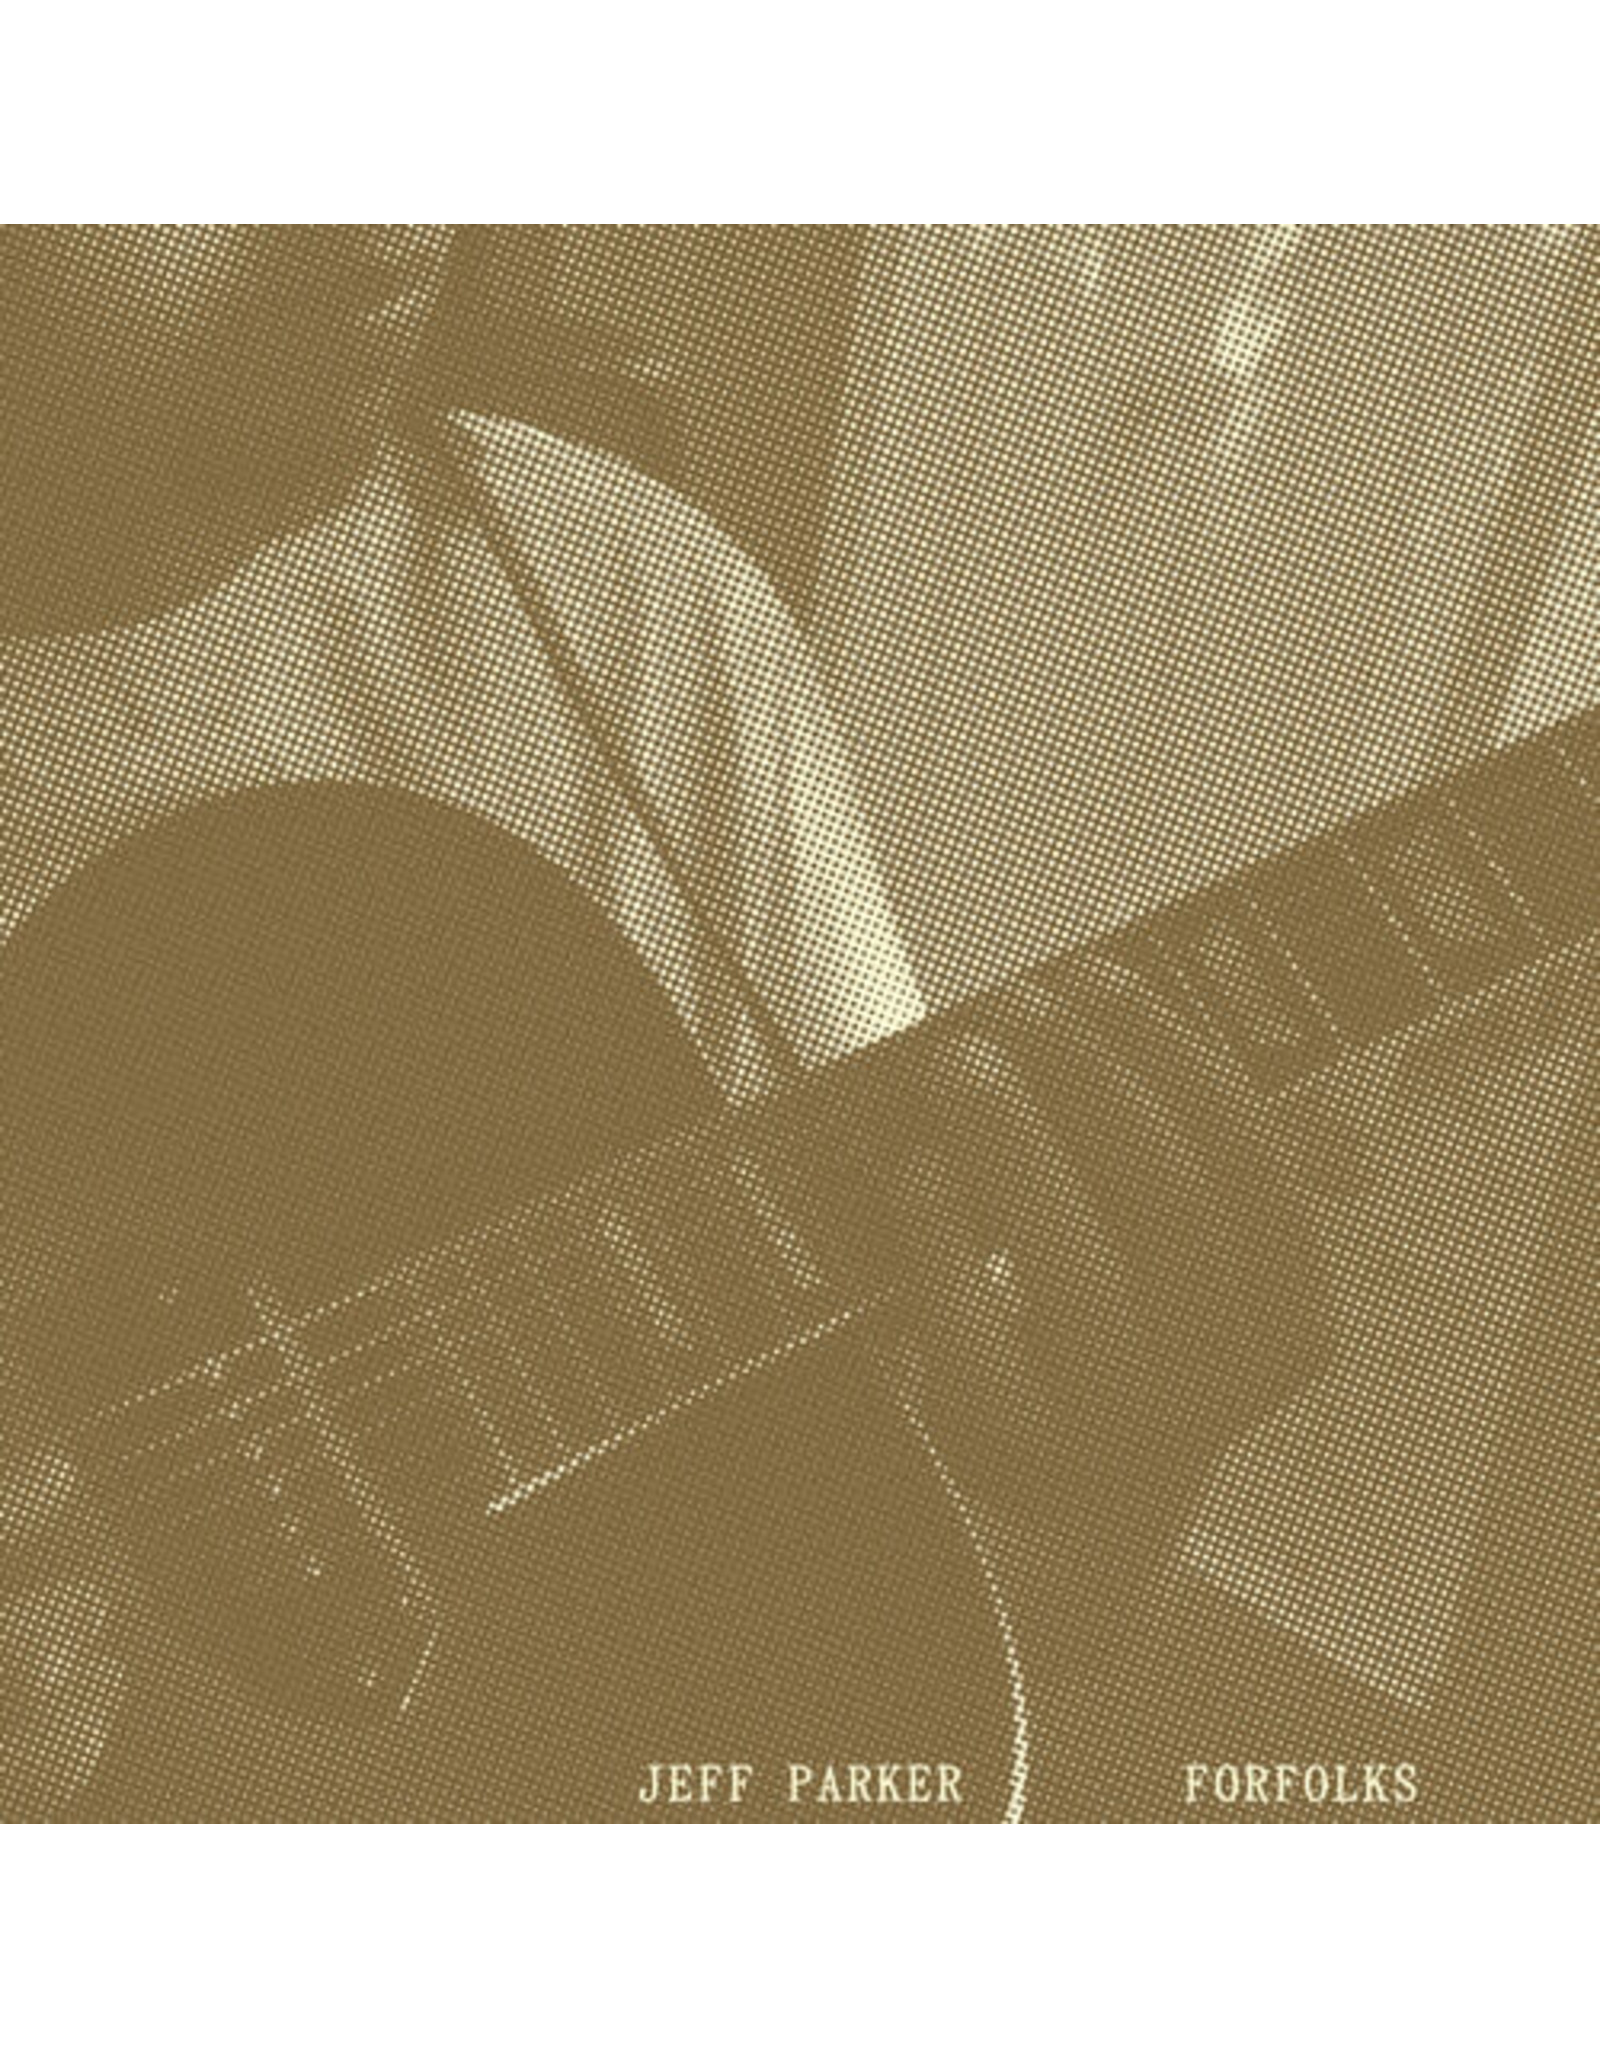 New Vinyl Jeff Parker - Forfolks LP